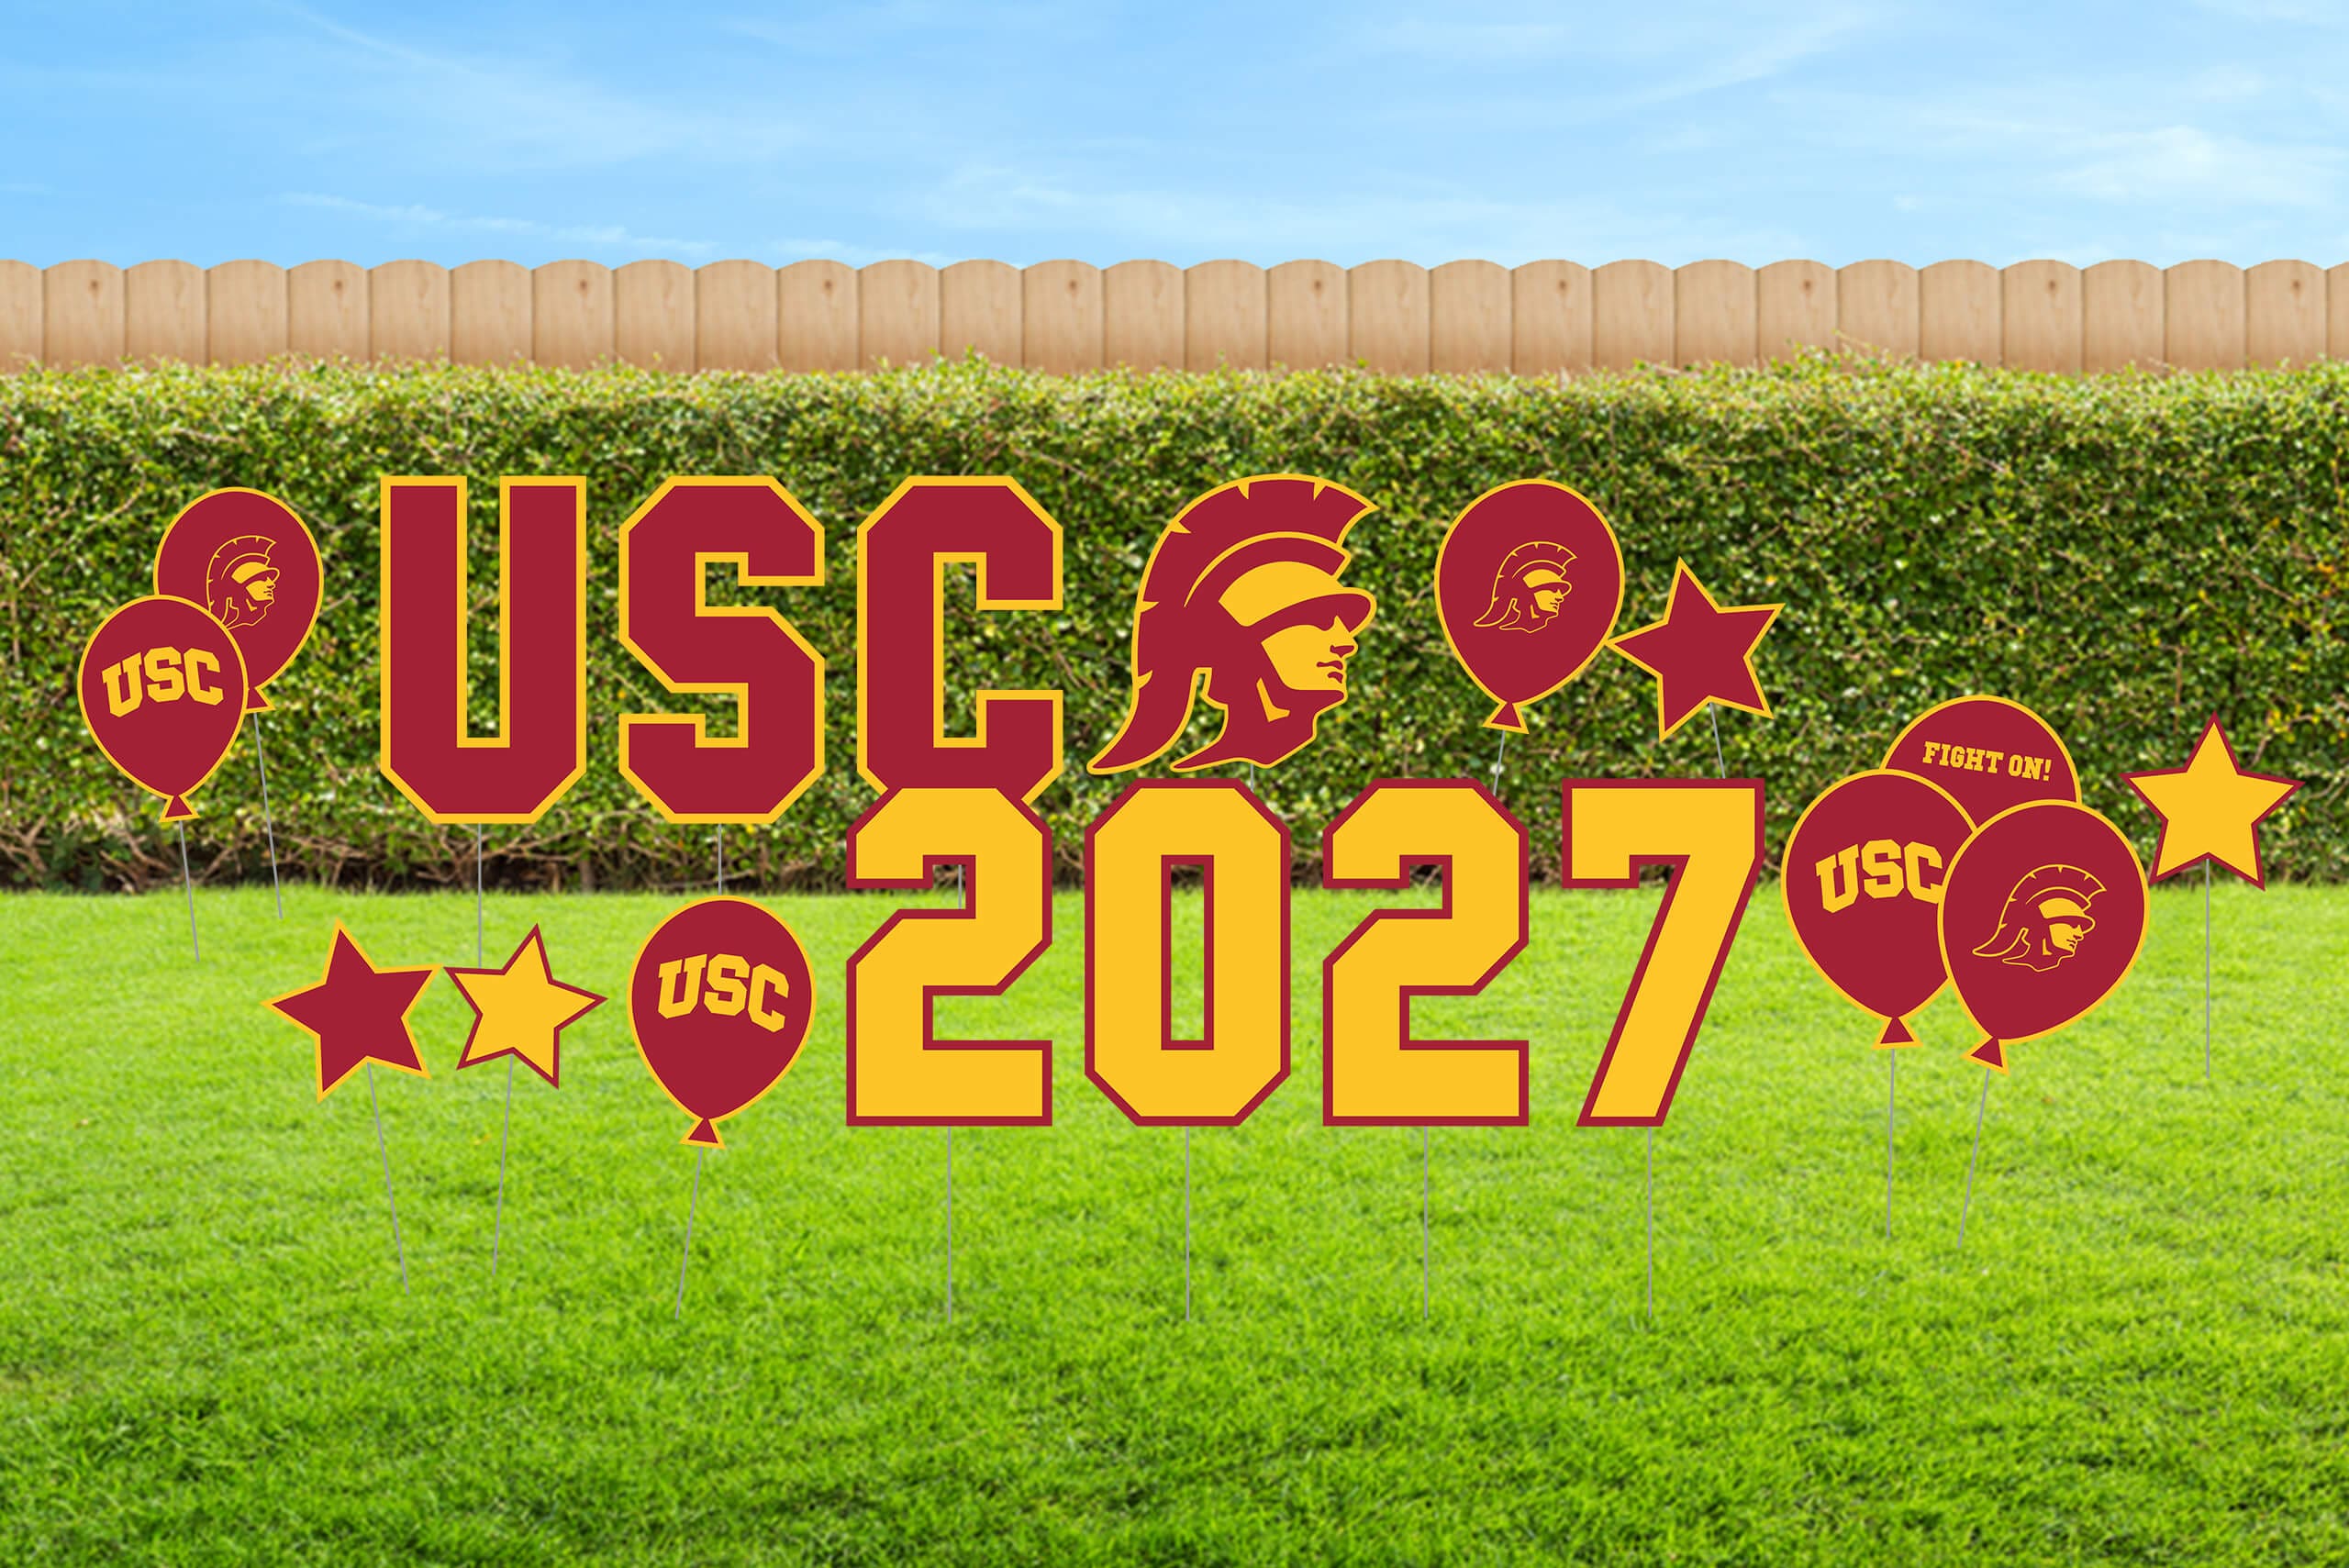 USC Class of 2027